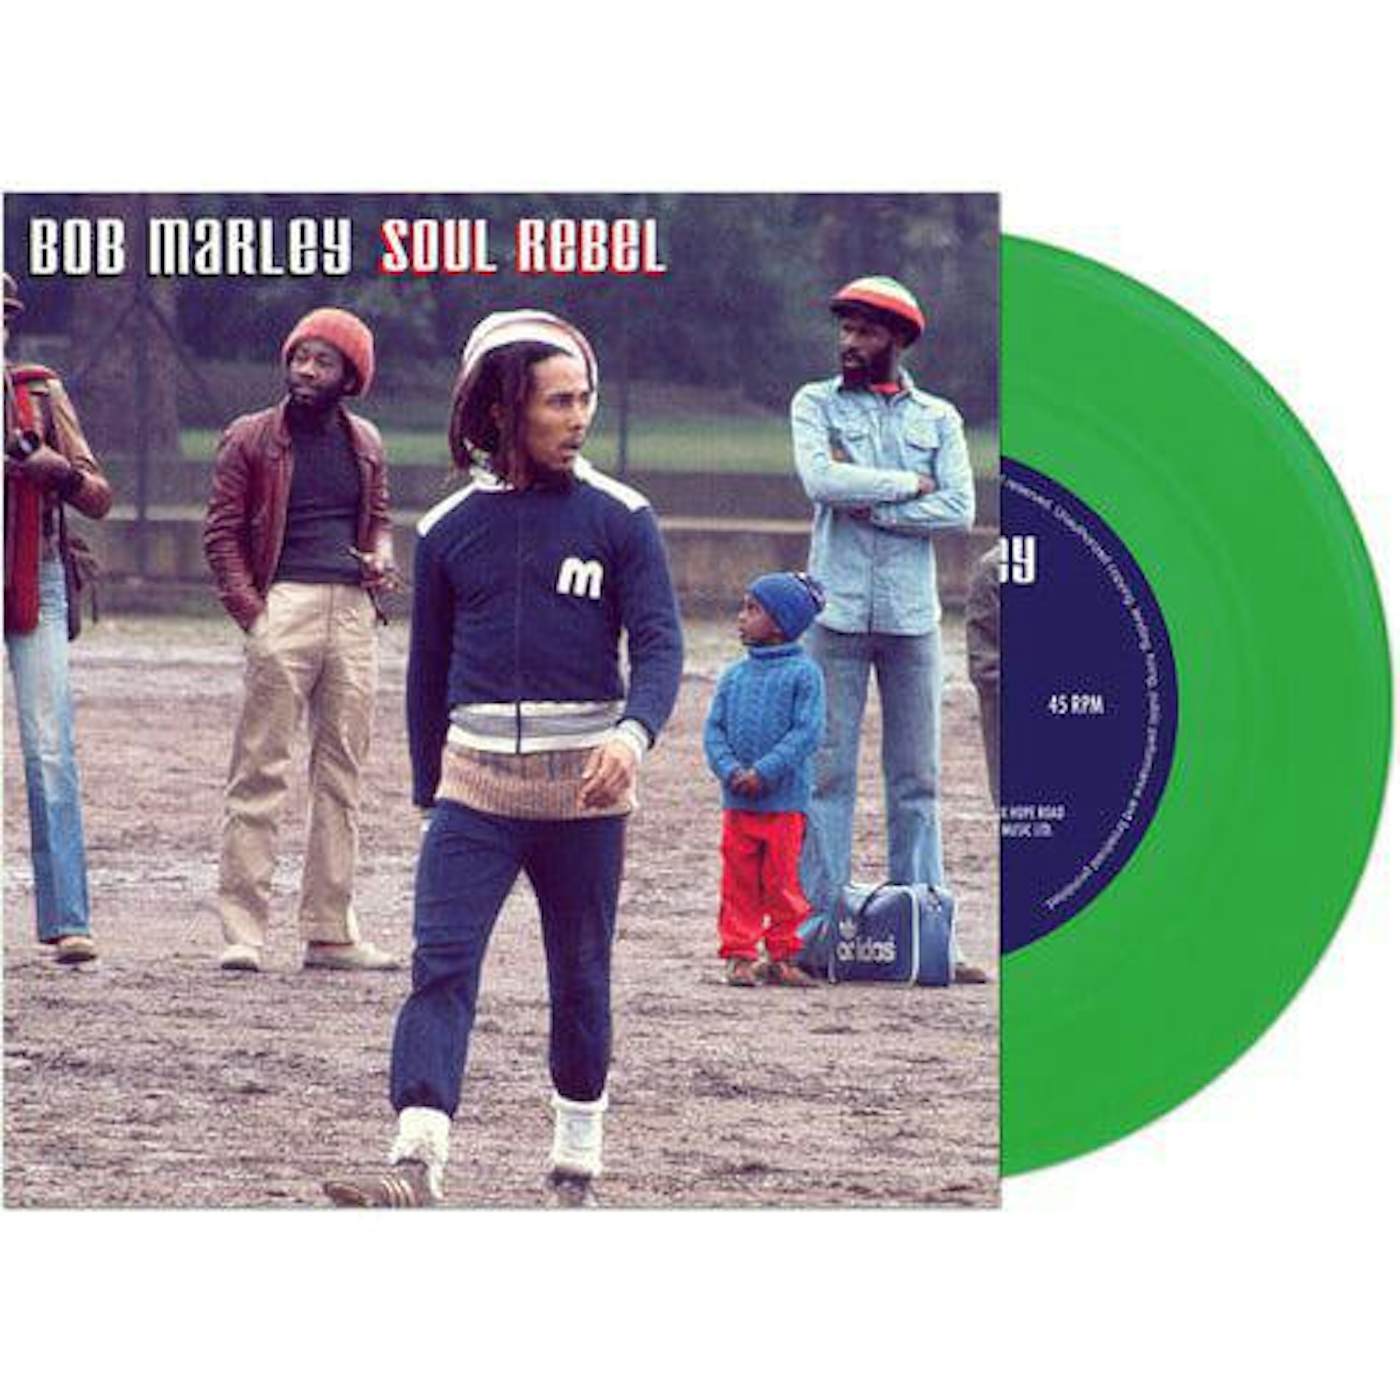 Bob Marley Soul Rebel (Limited Edition/Green) Vinyl Record